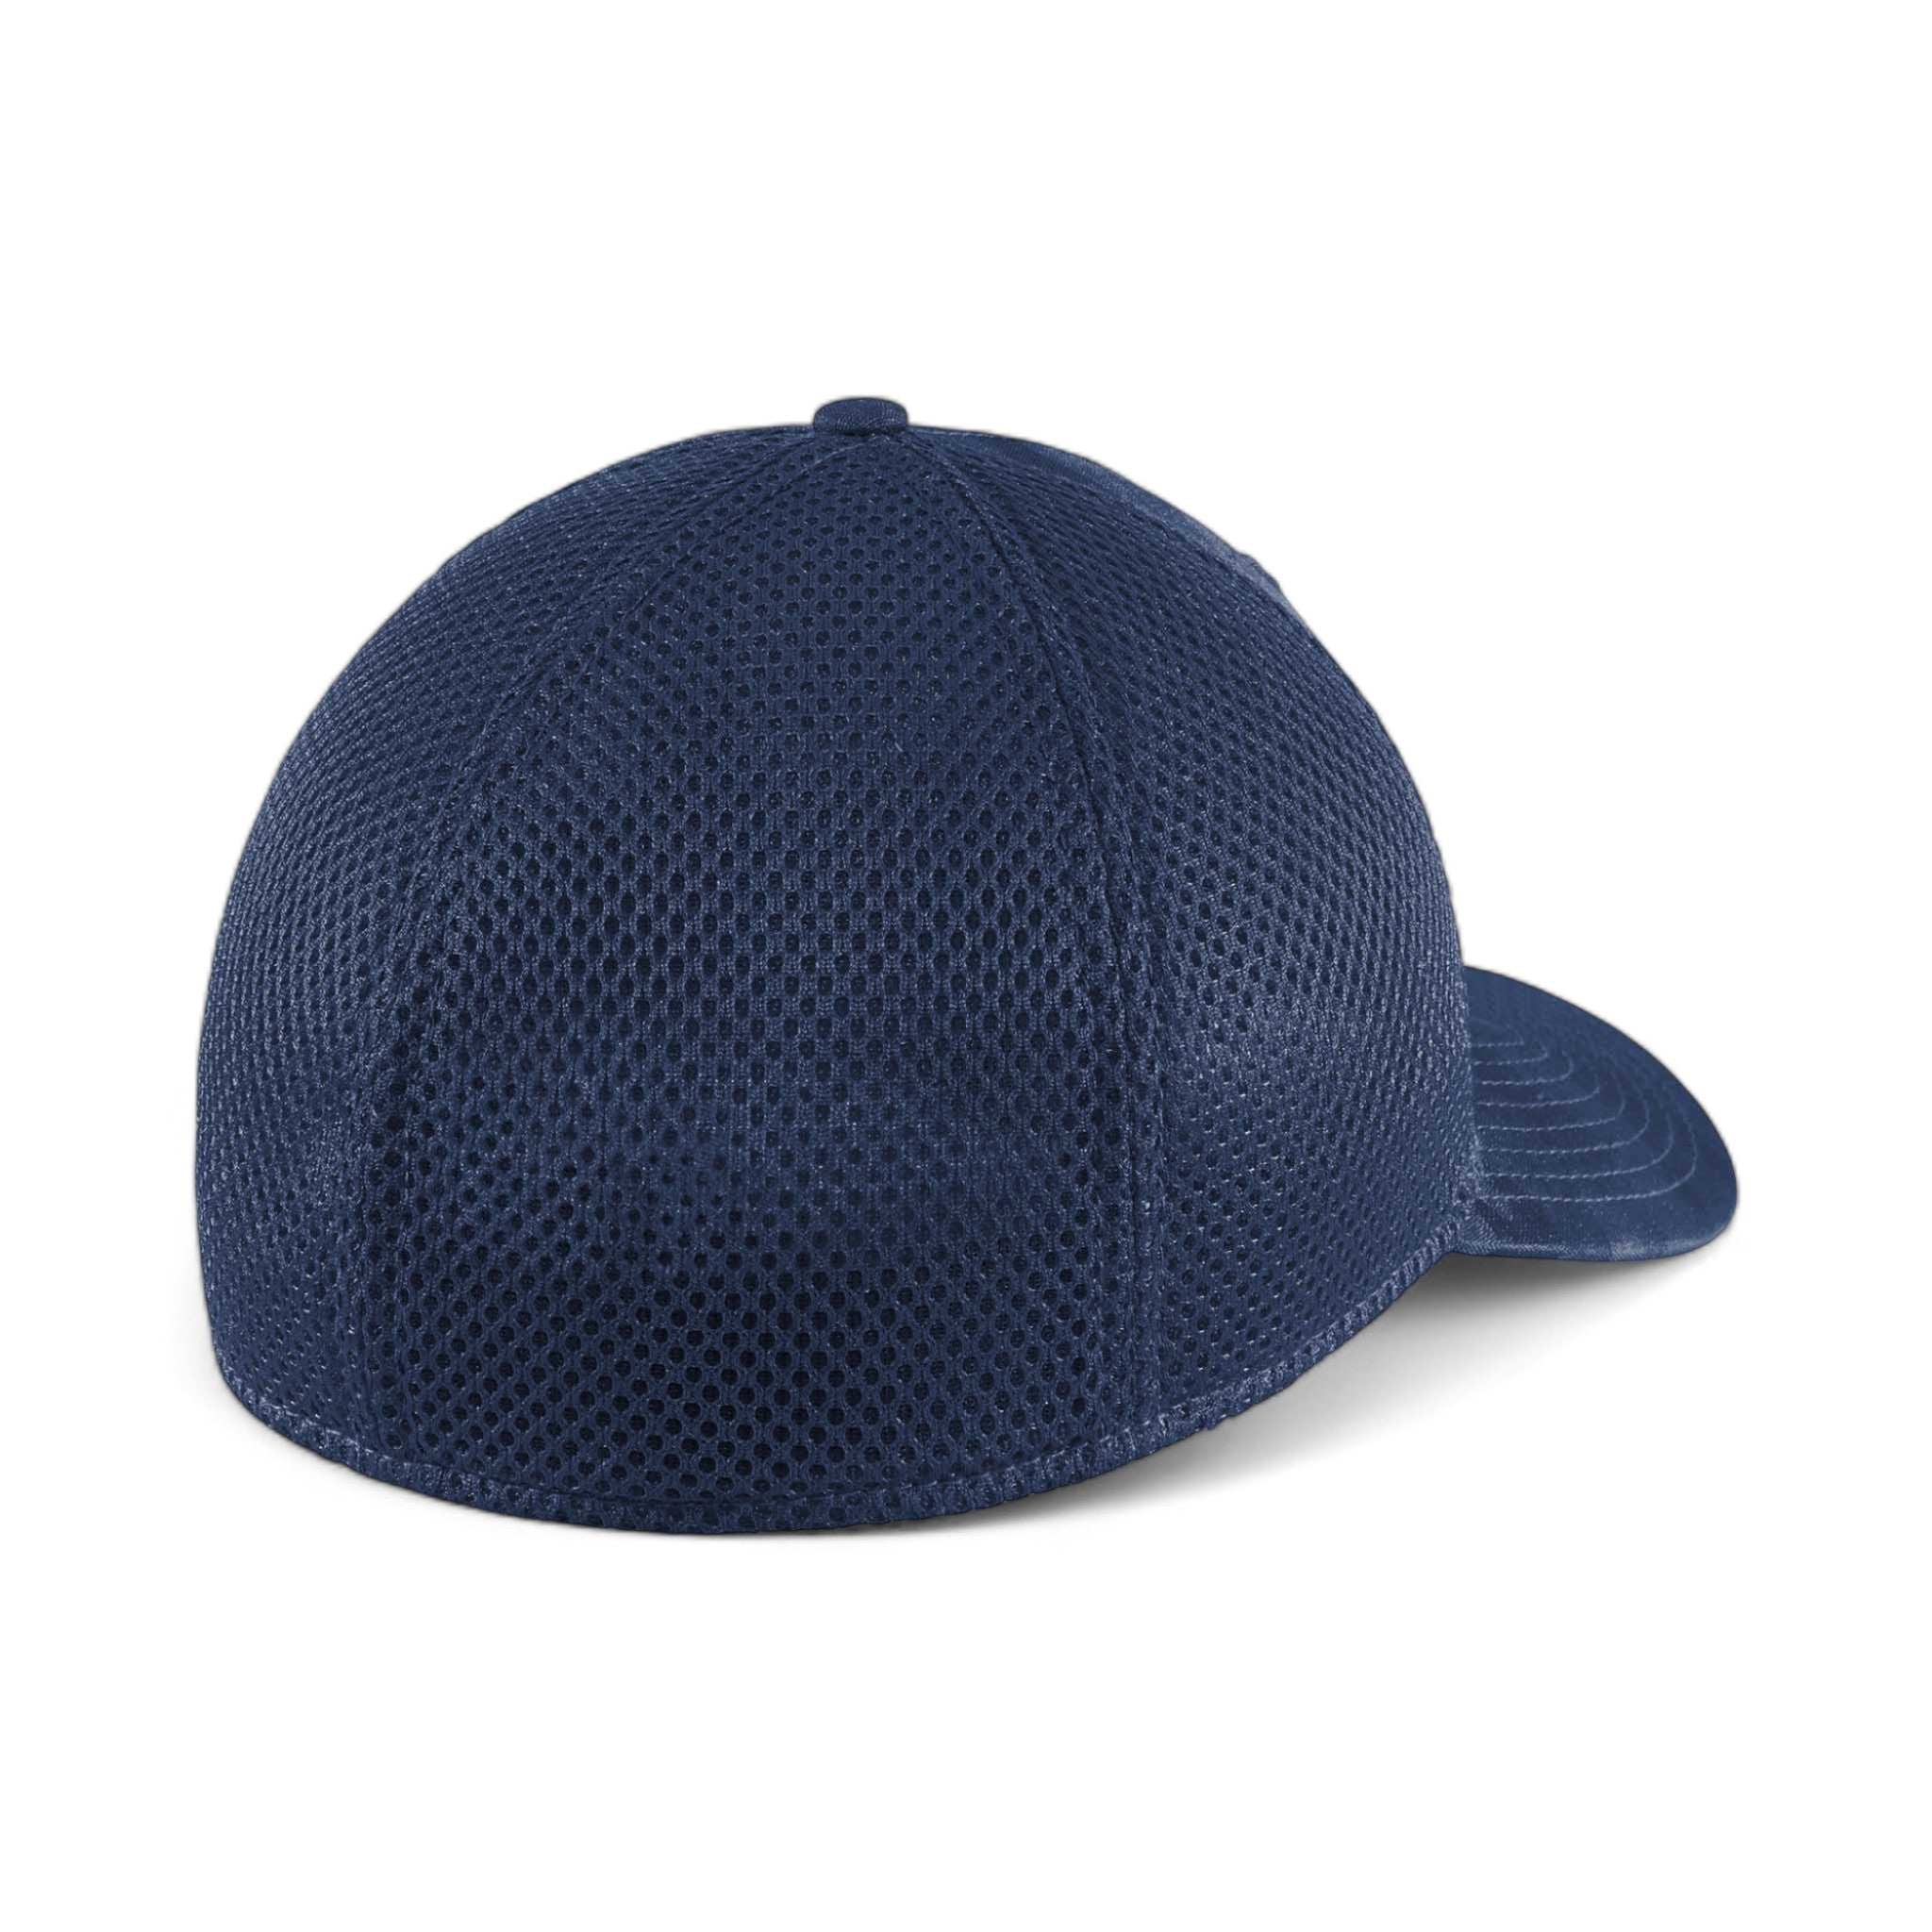 Back view of New Era NE1091 custom hat in navy camo